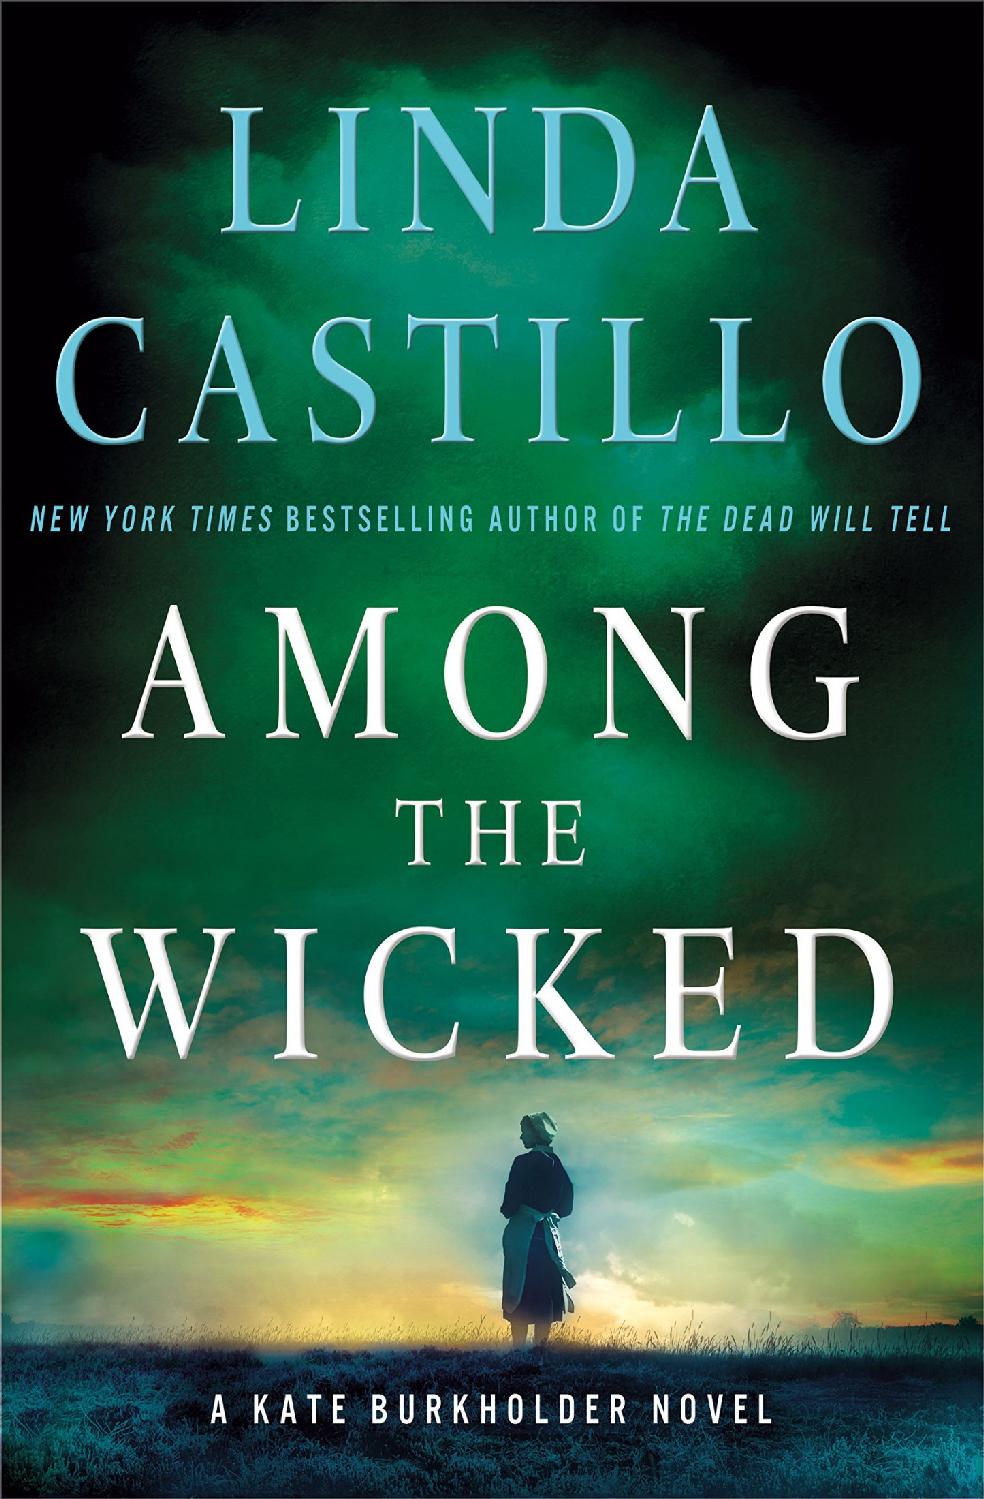 Among the Wicked: A Kate Burkholder Novel by Linda Castillo